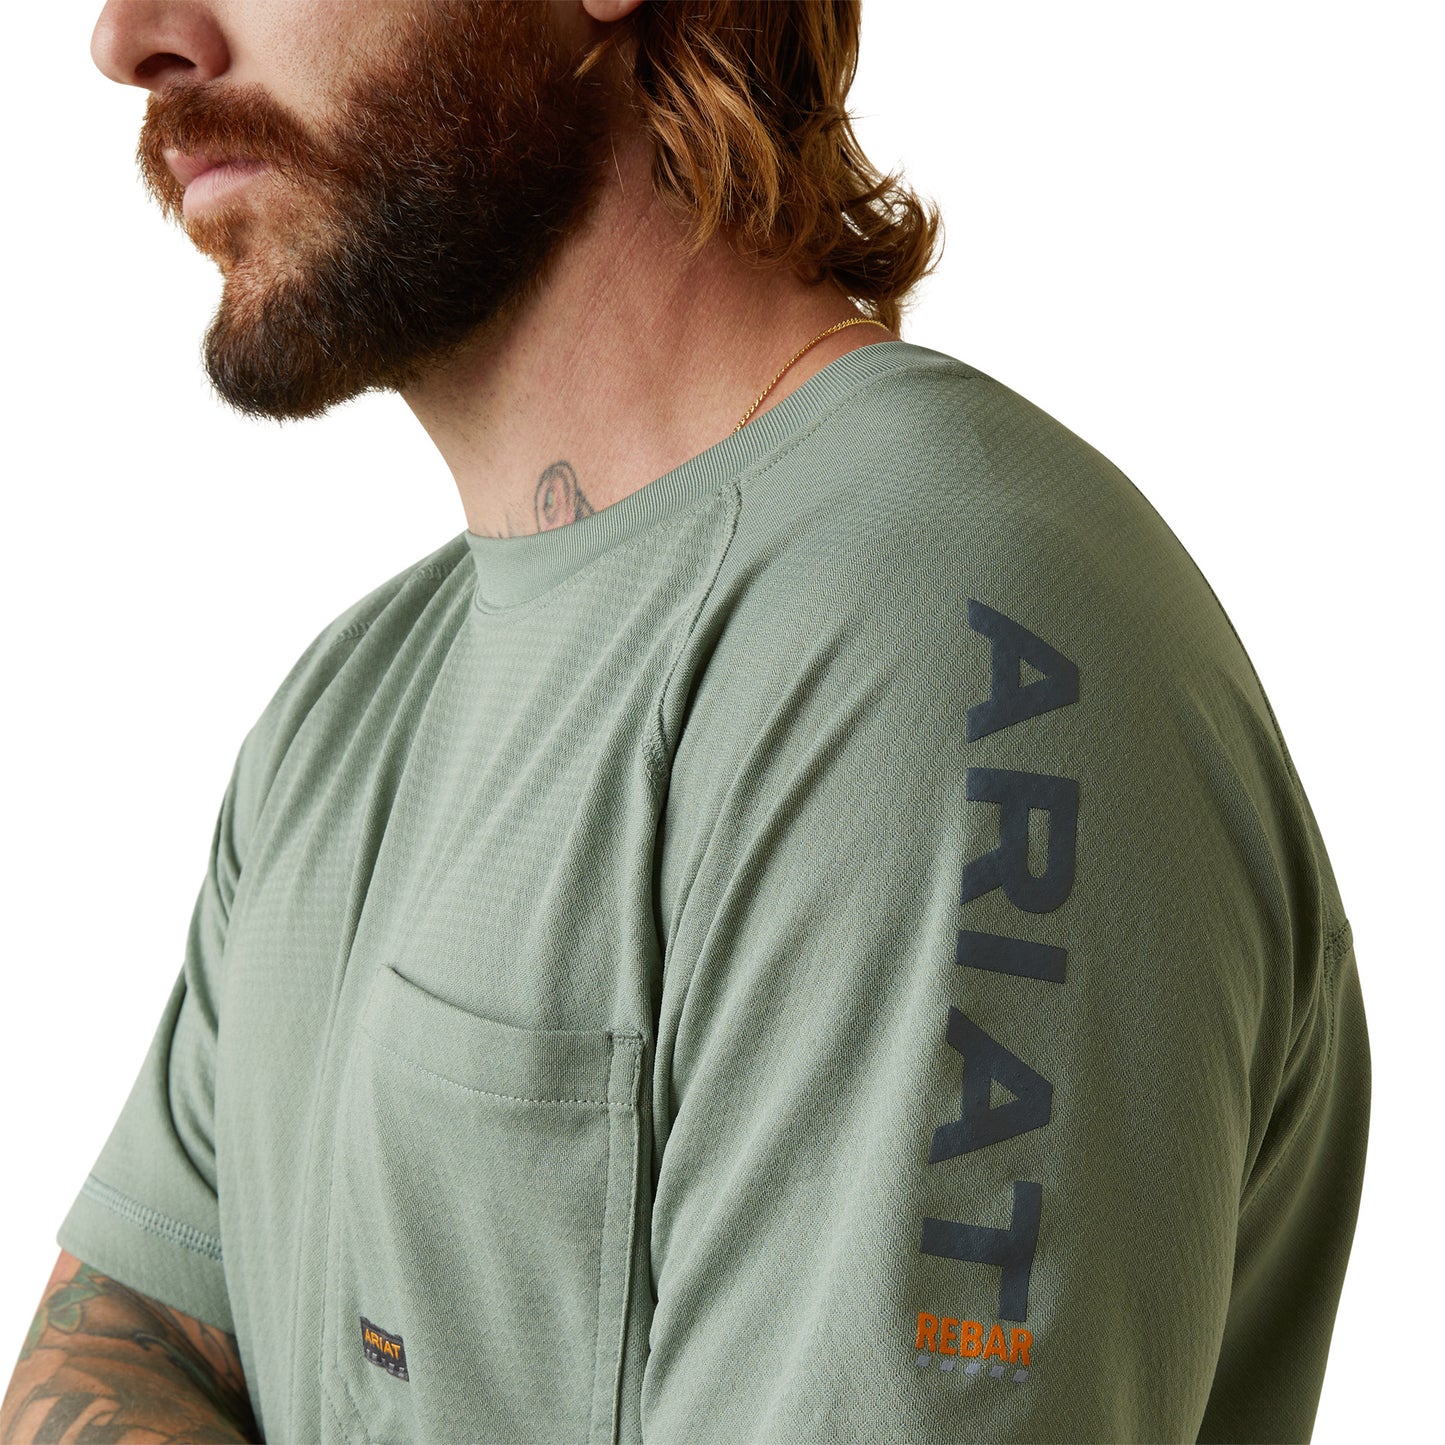 Ariat® Men's Rebar Heat Fighter Lily Pad Green Long Sleeves T-Shirt 10043543